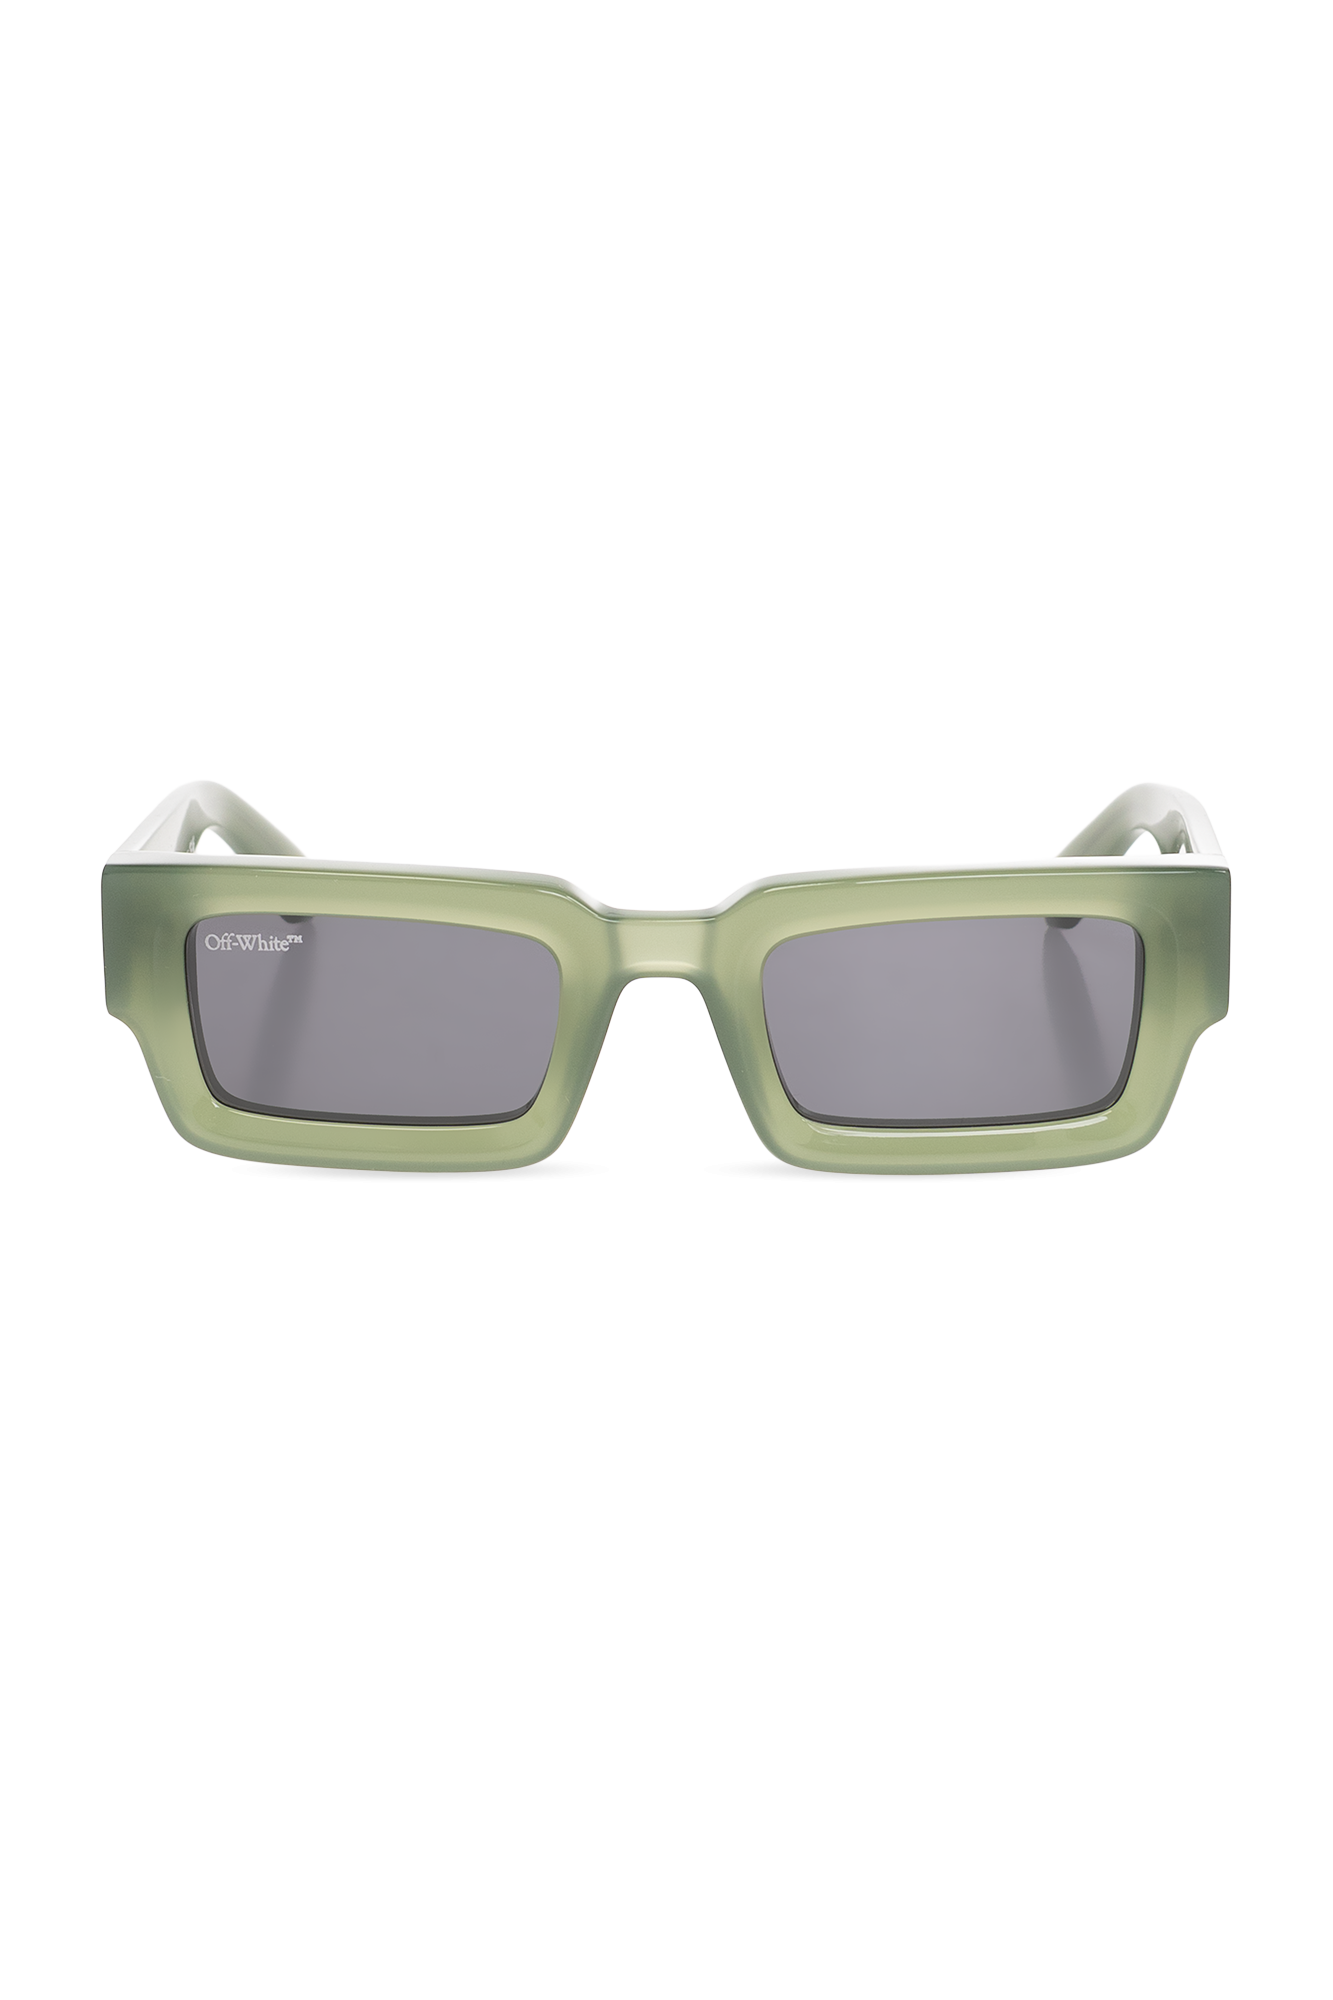 OFF-WHITE Lecce Rectangular-Frame Acetate Sunglasses for Men